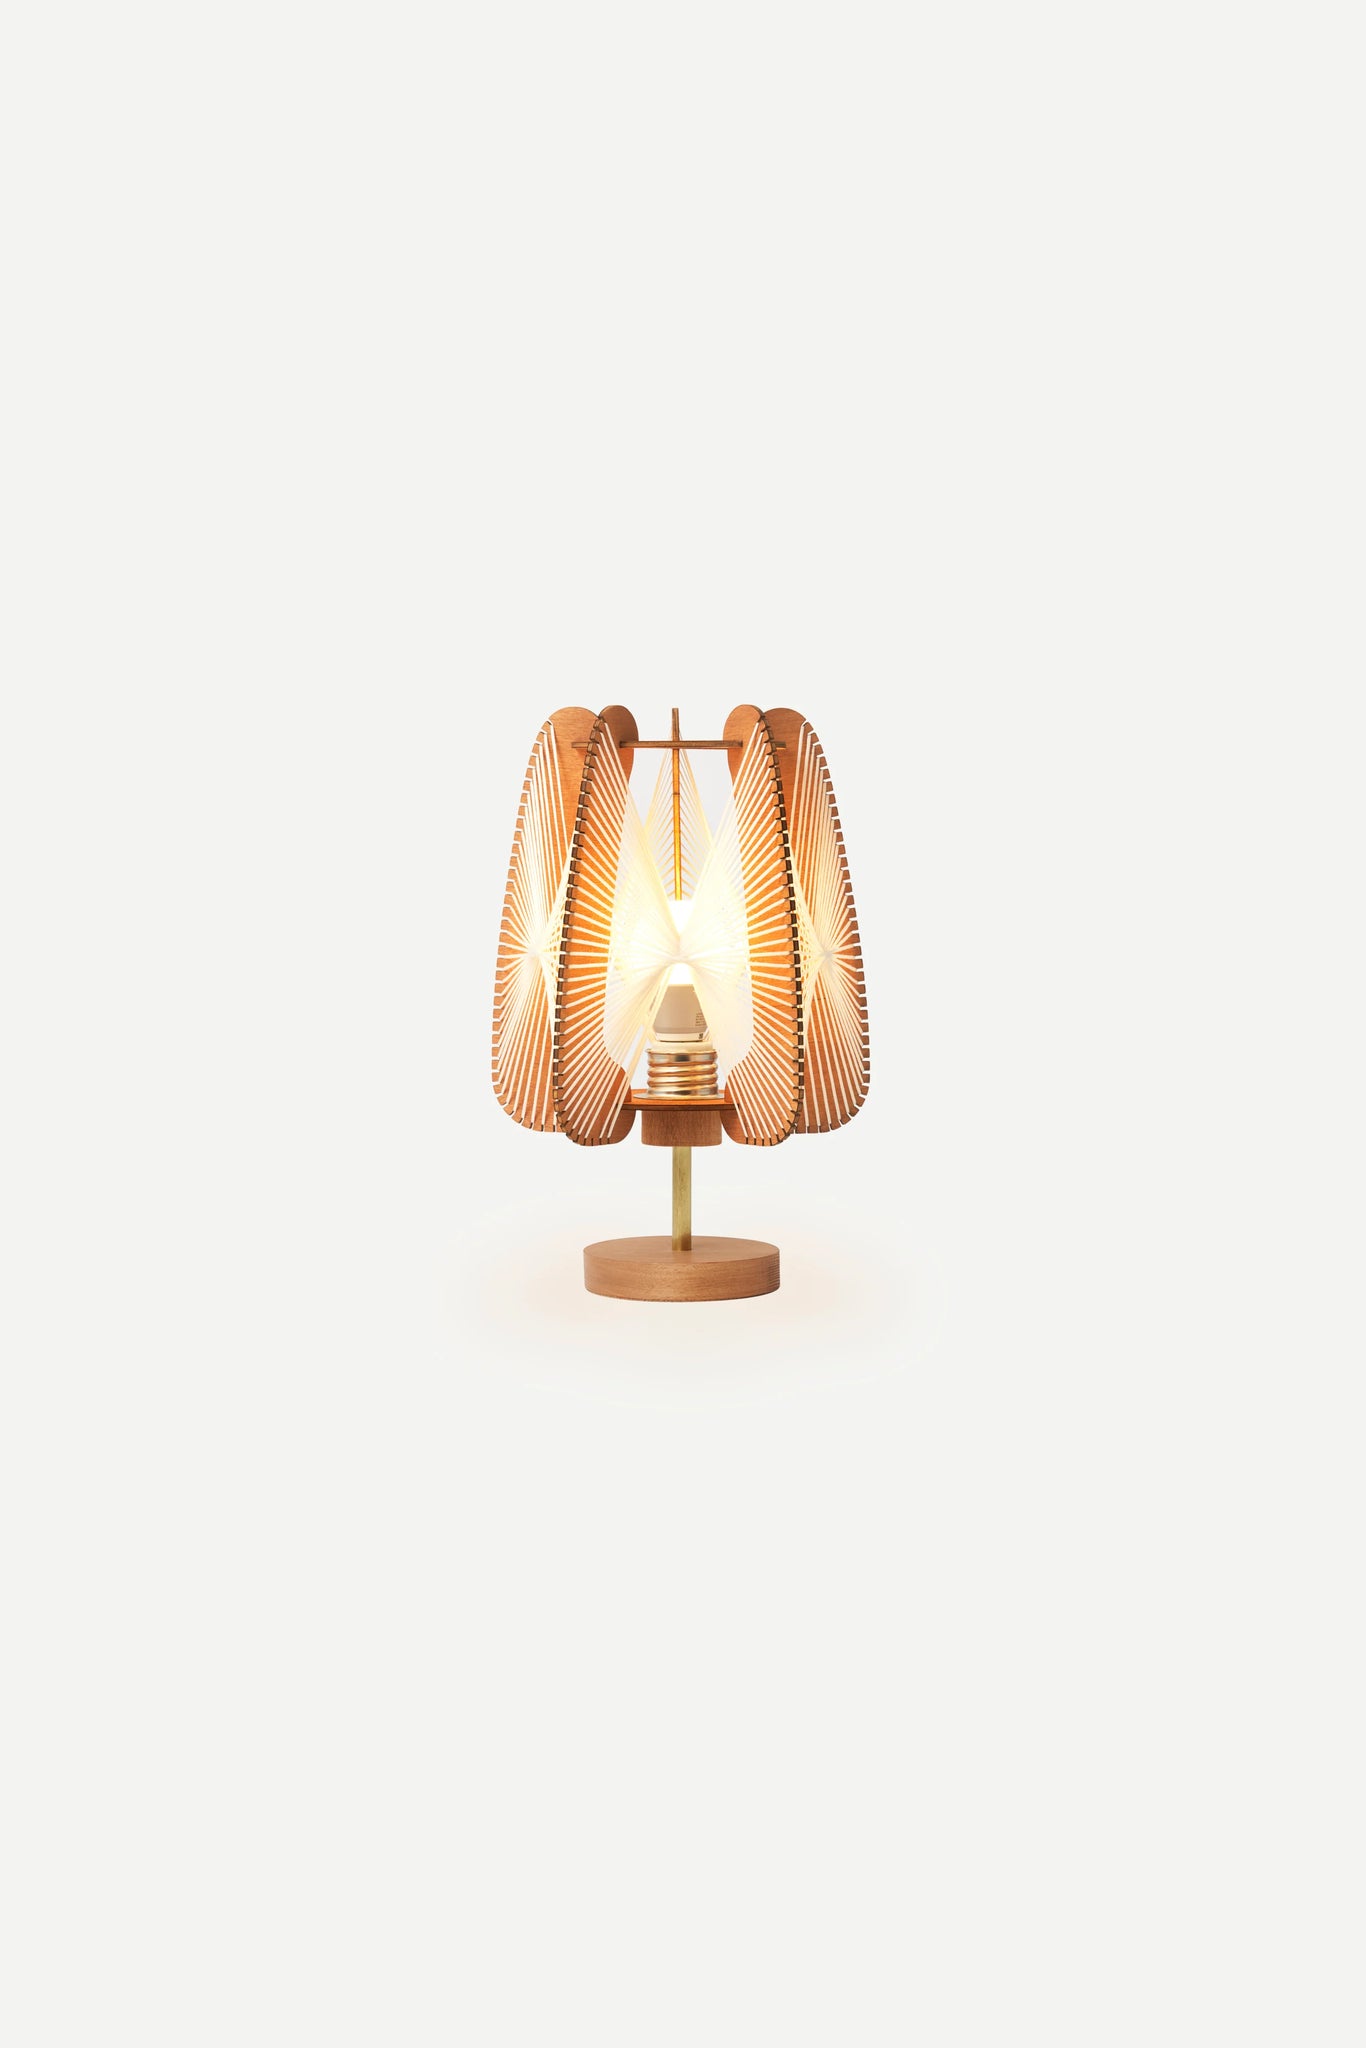 LAFABLIGHT "ARIOCA / UFOLA TABLE LAMP"